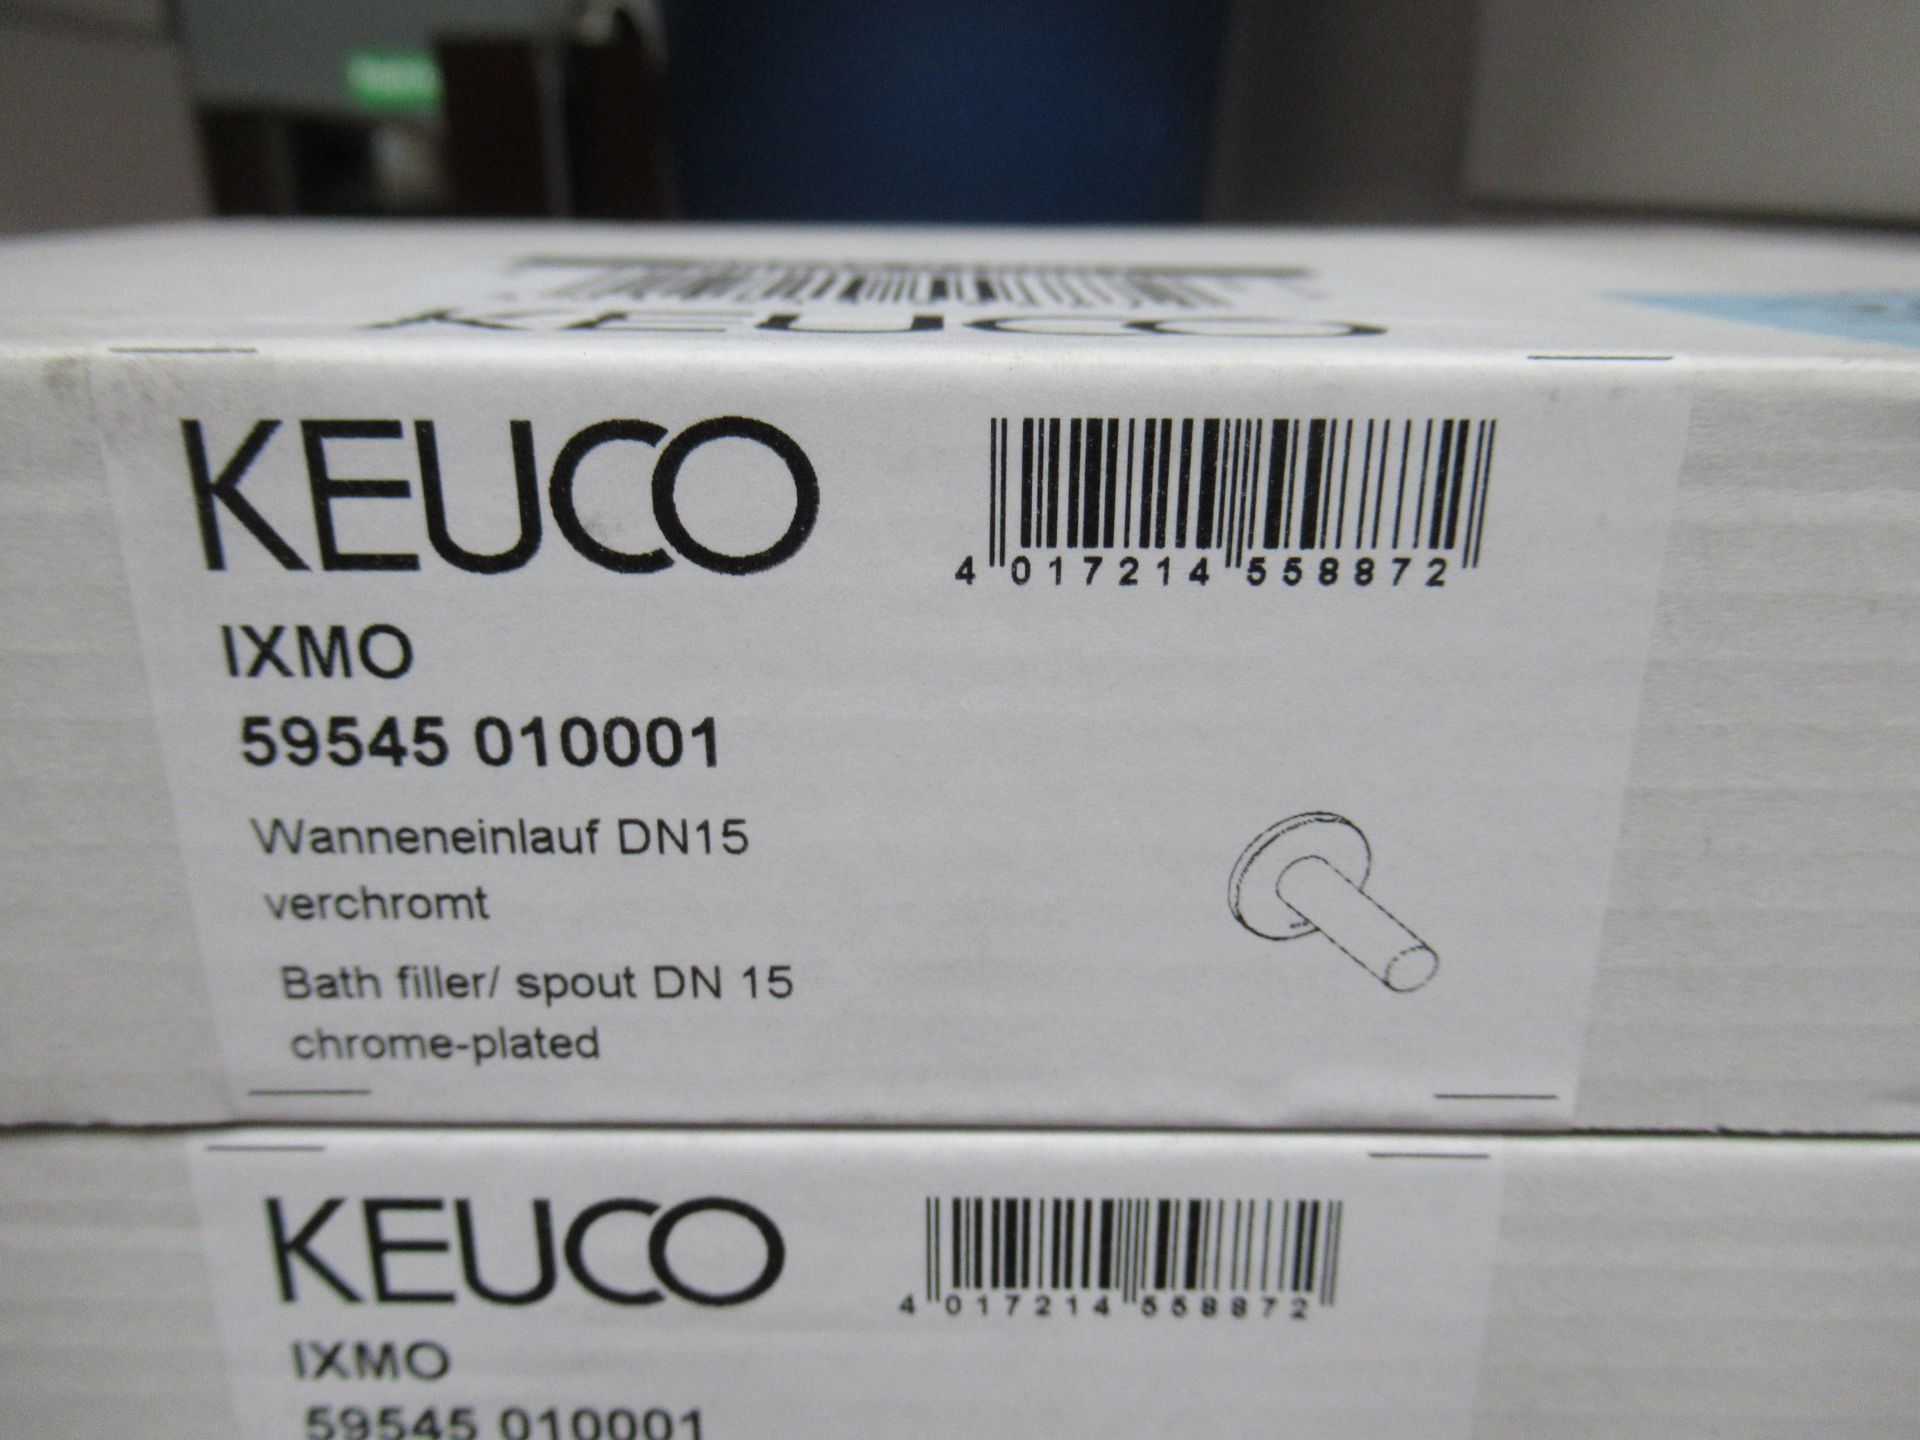 2 x Keuco IXMO Bath Filler Spout, Chrome Plated, P/N 59545-010001 - Image 2 of 2